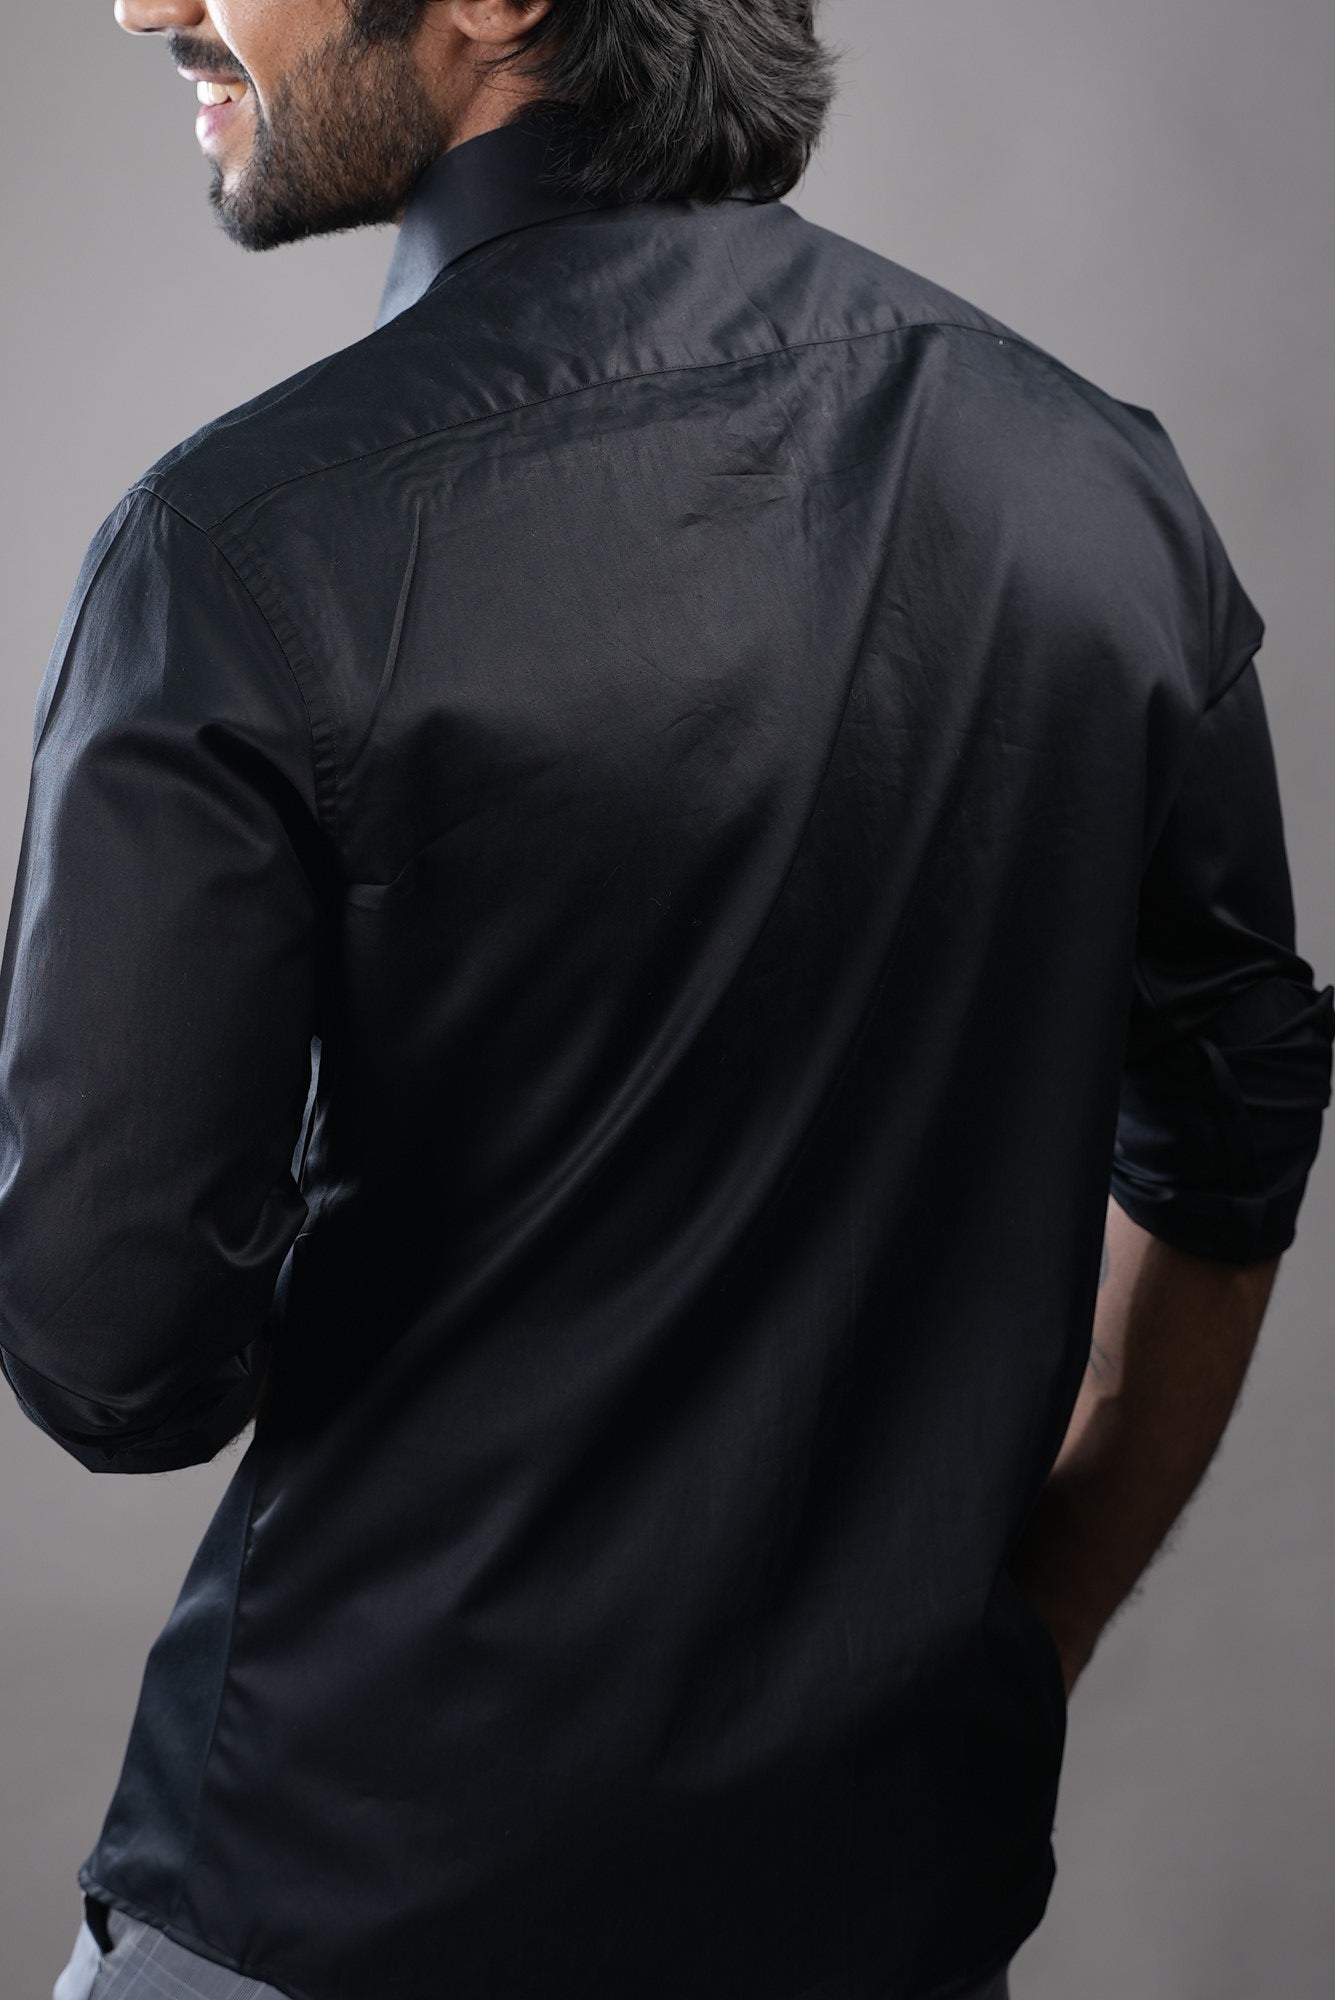 Men's Black Color V Pintuck Full Sleeves Casual Shirt - Hilo Design